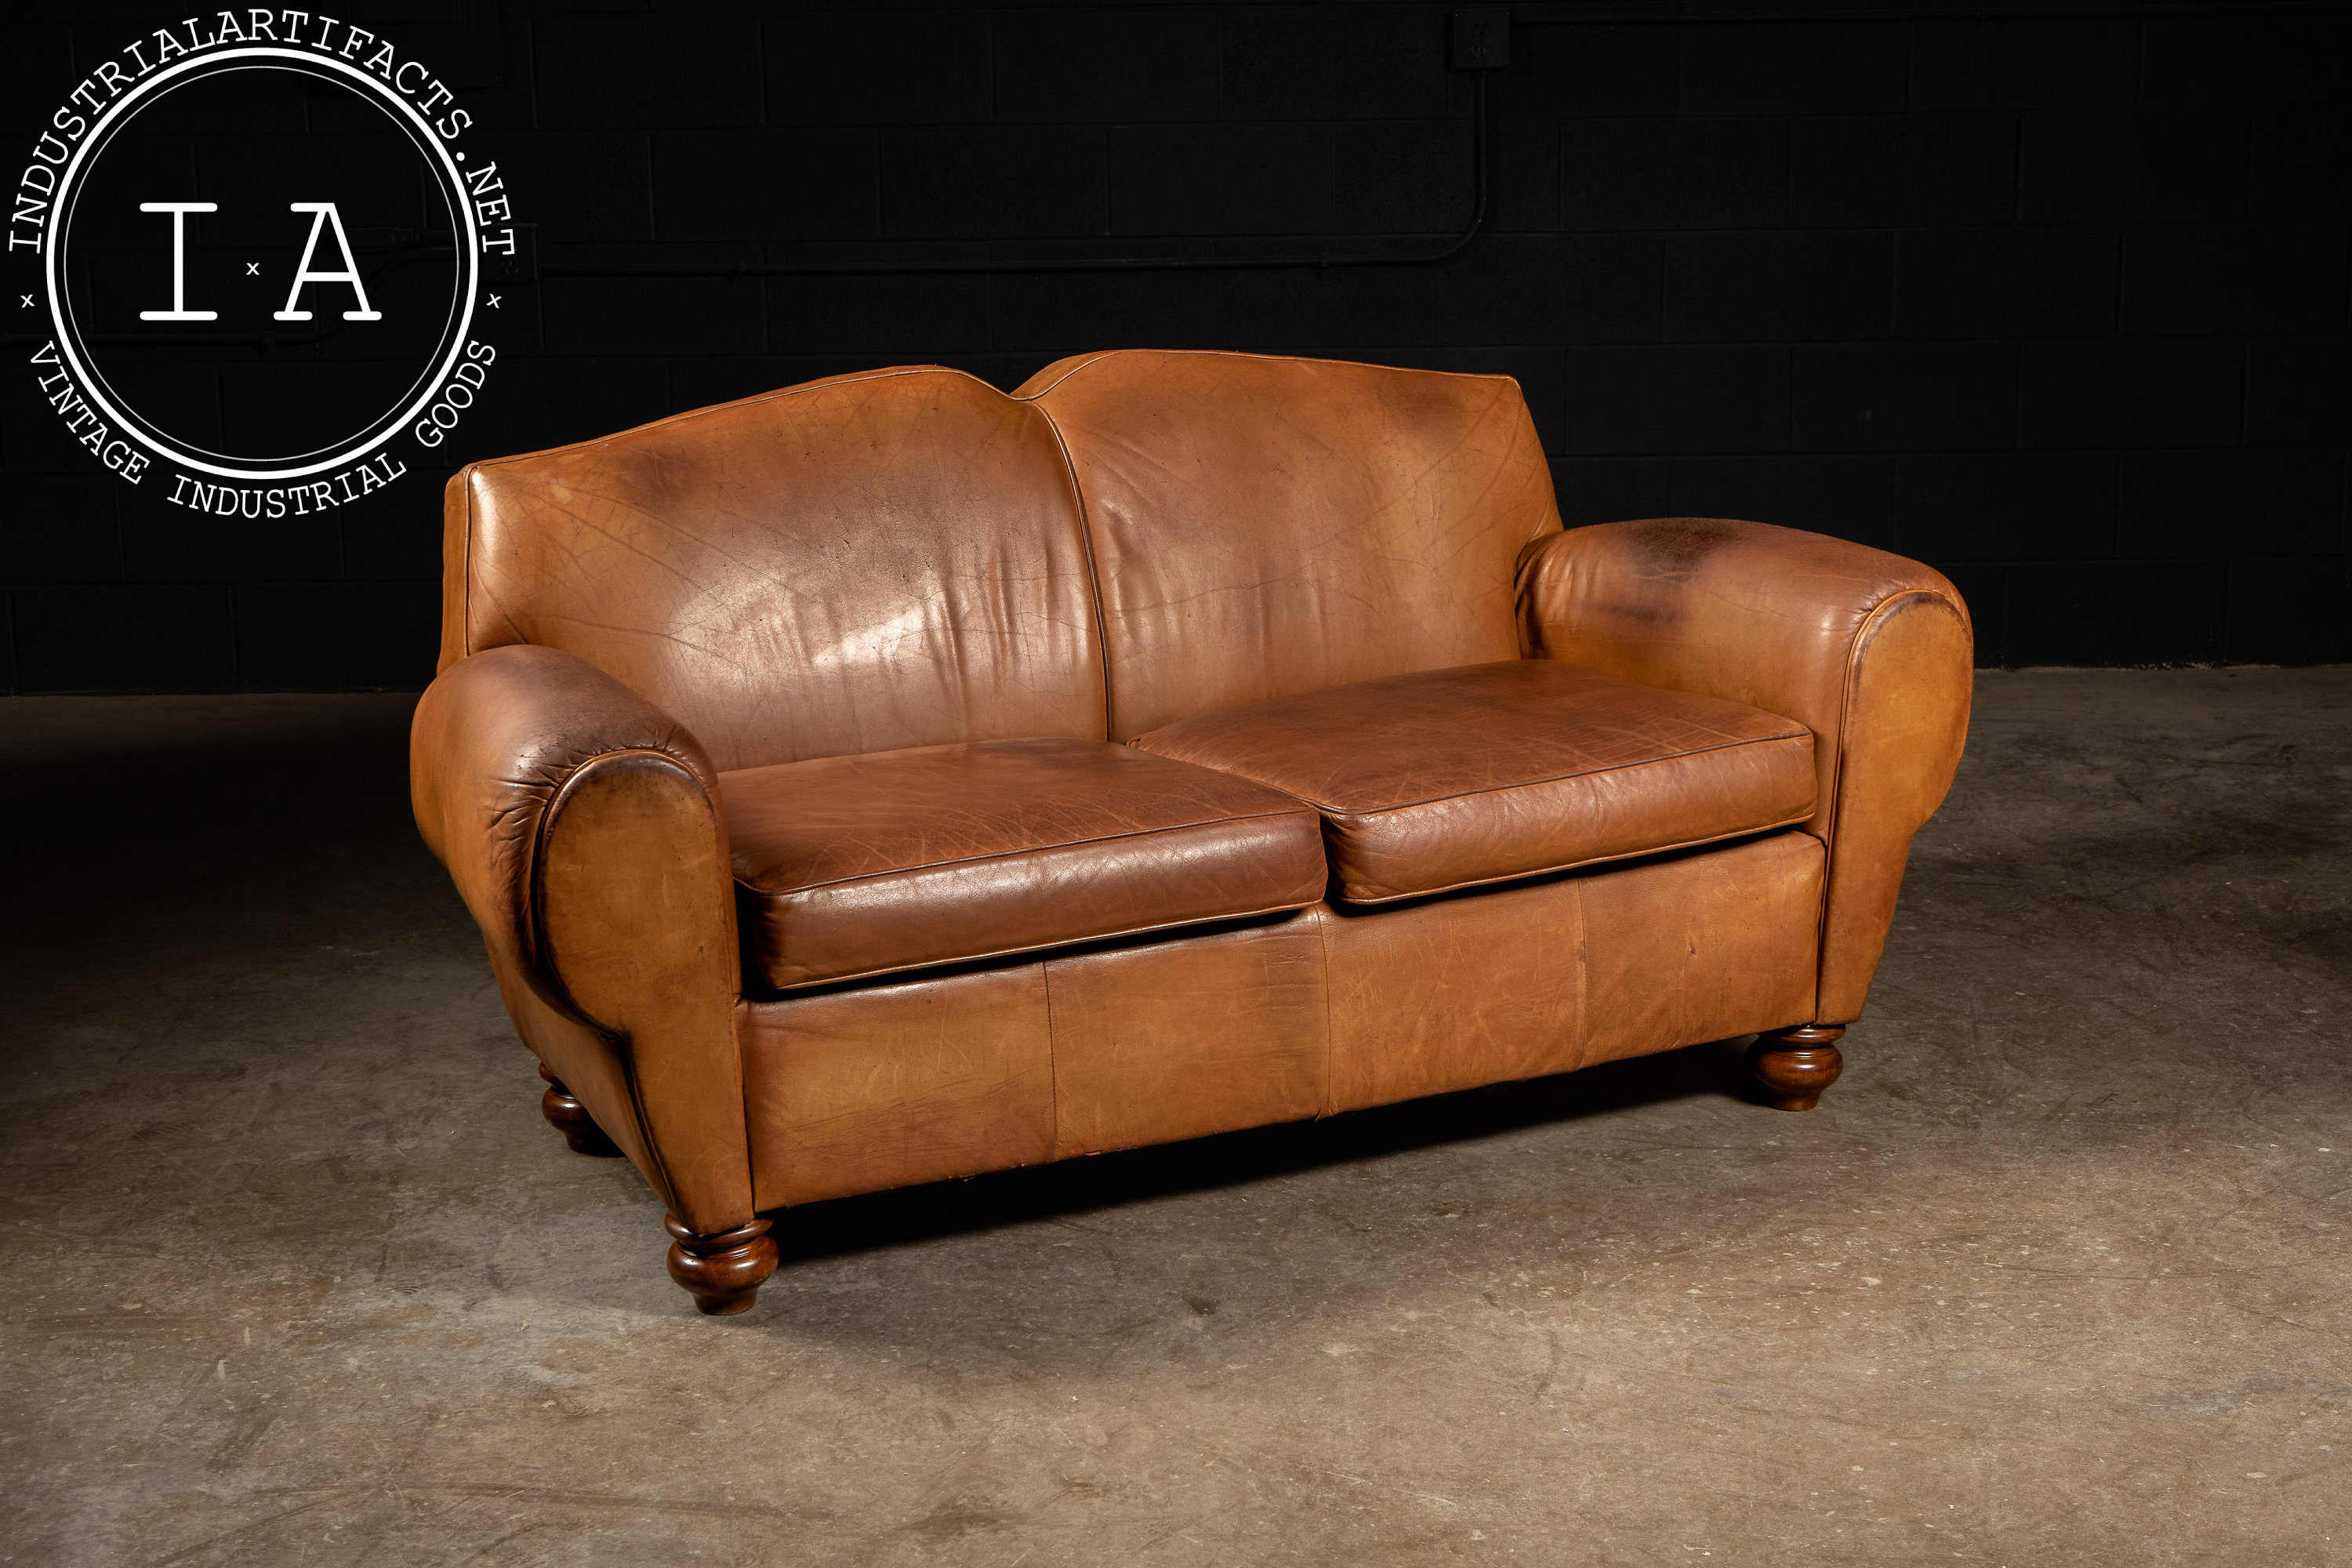 Leather Repair Kit - Espresso Brown - Furniture Vinyl Couch Purse Sofa Bag  Car Seat Restorer